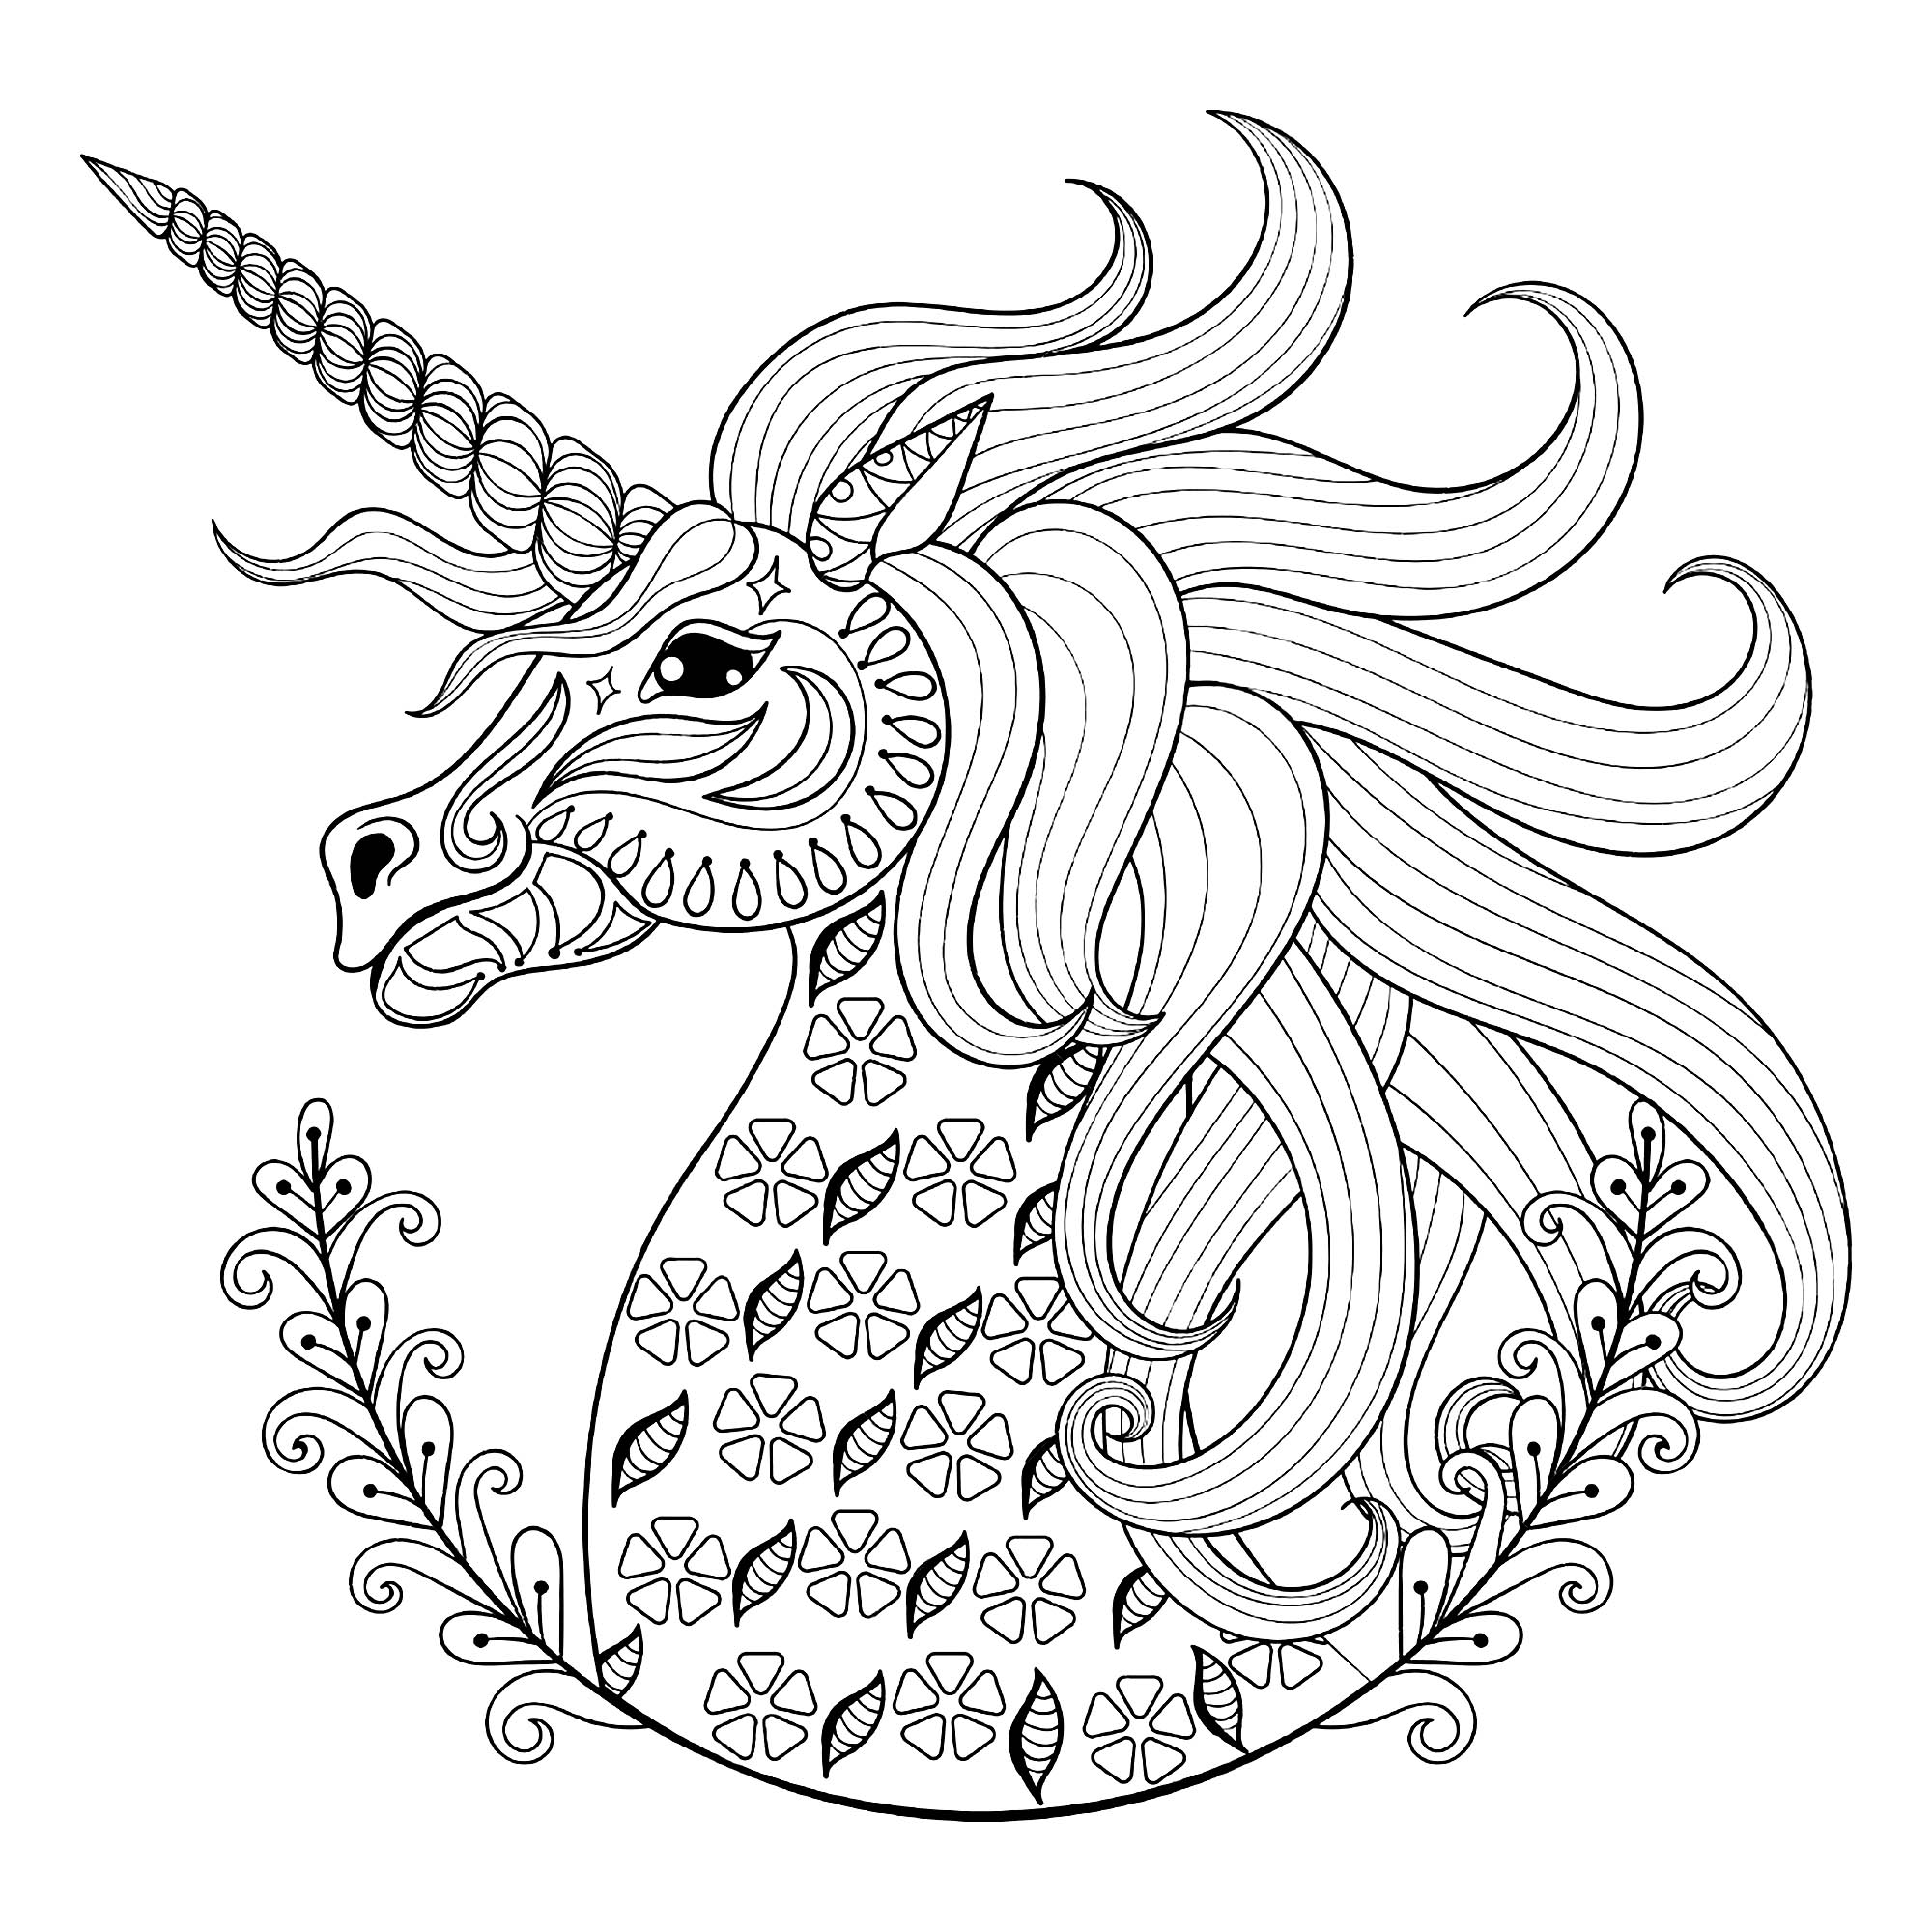 Desenhos-de-unicornio-para-colorir - Arte